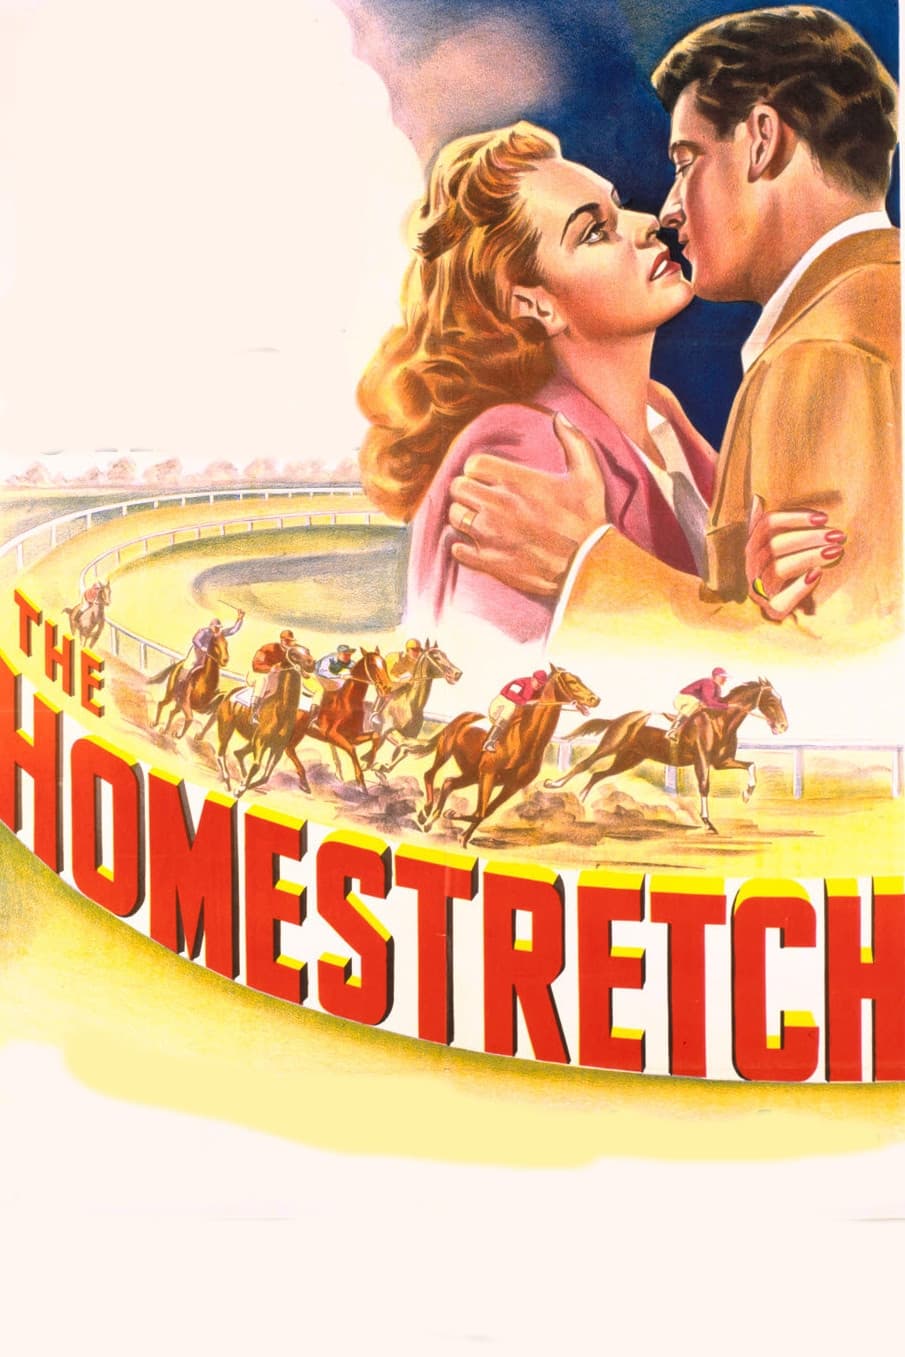 The Homestretch